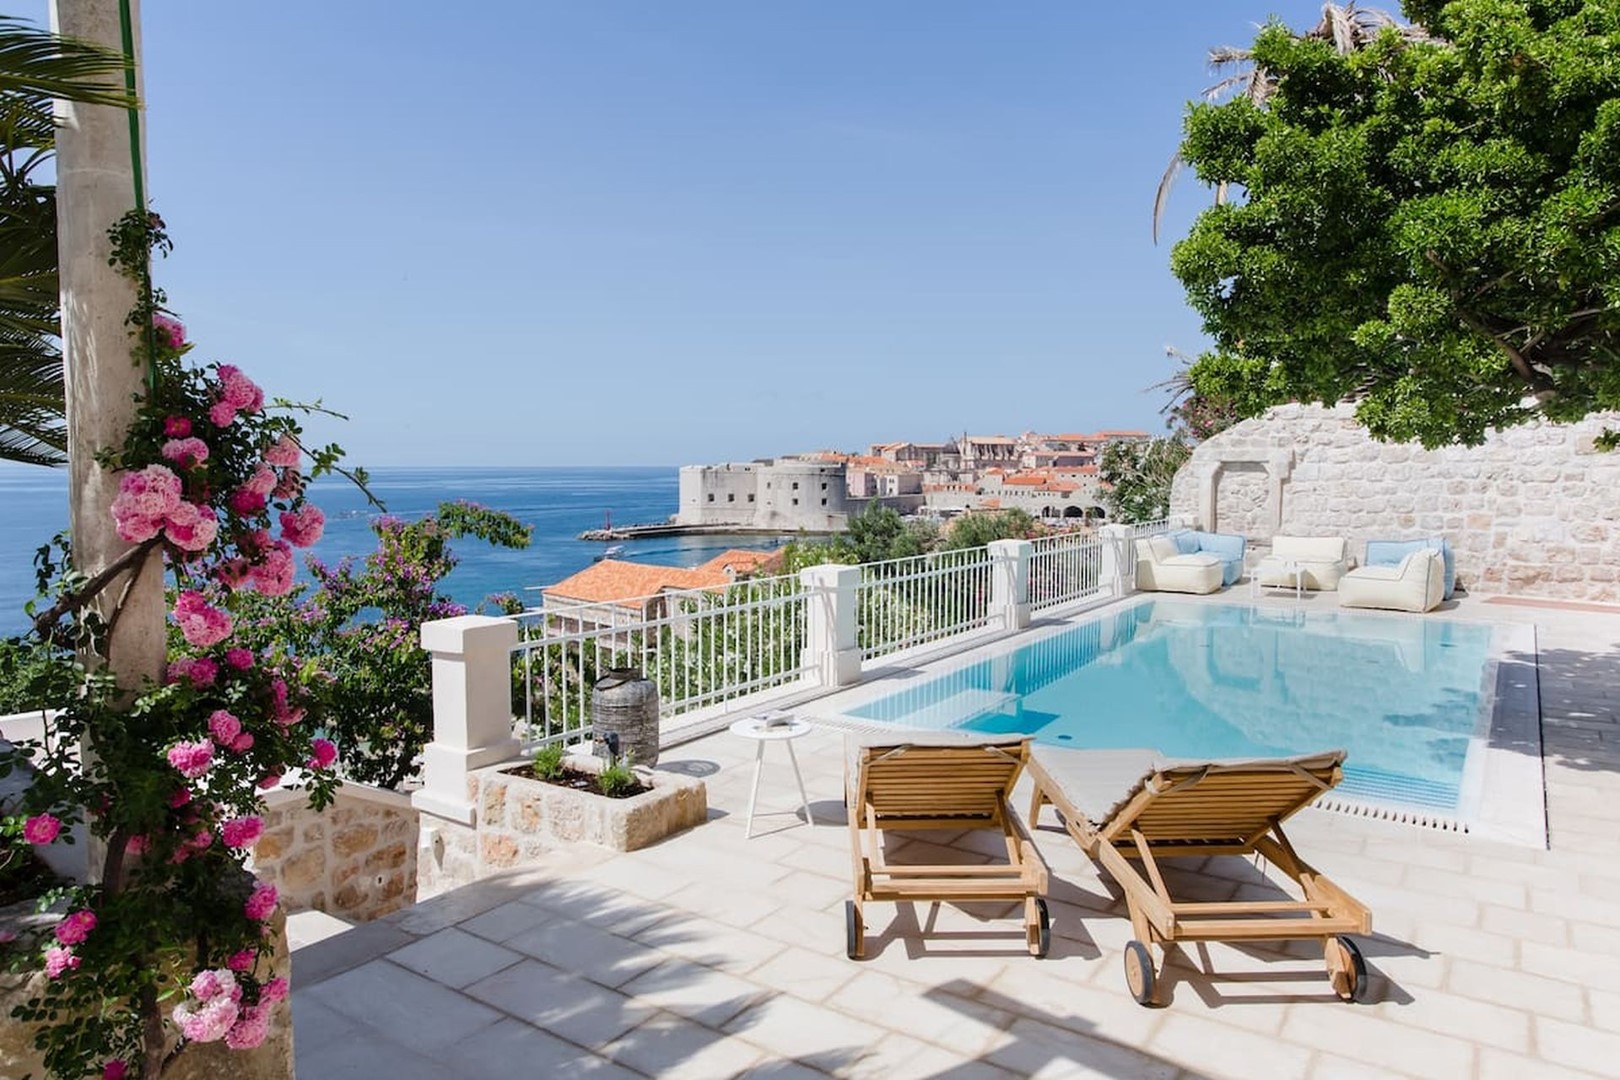 LUXURY VILLAS DUBROVNIK - Luxury Villa Opulent Dubrovnik with pool by the beach in Dubrovnik